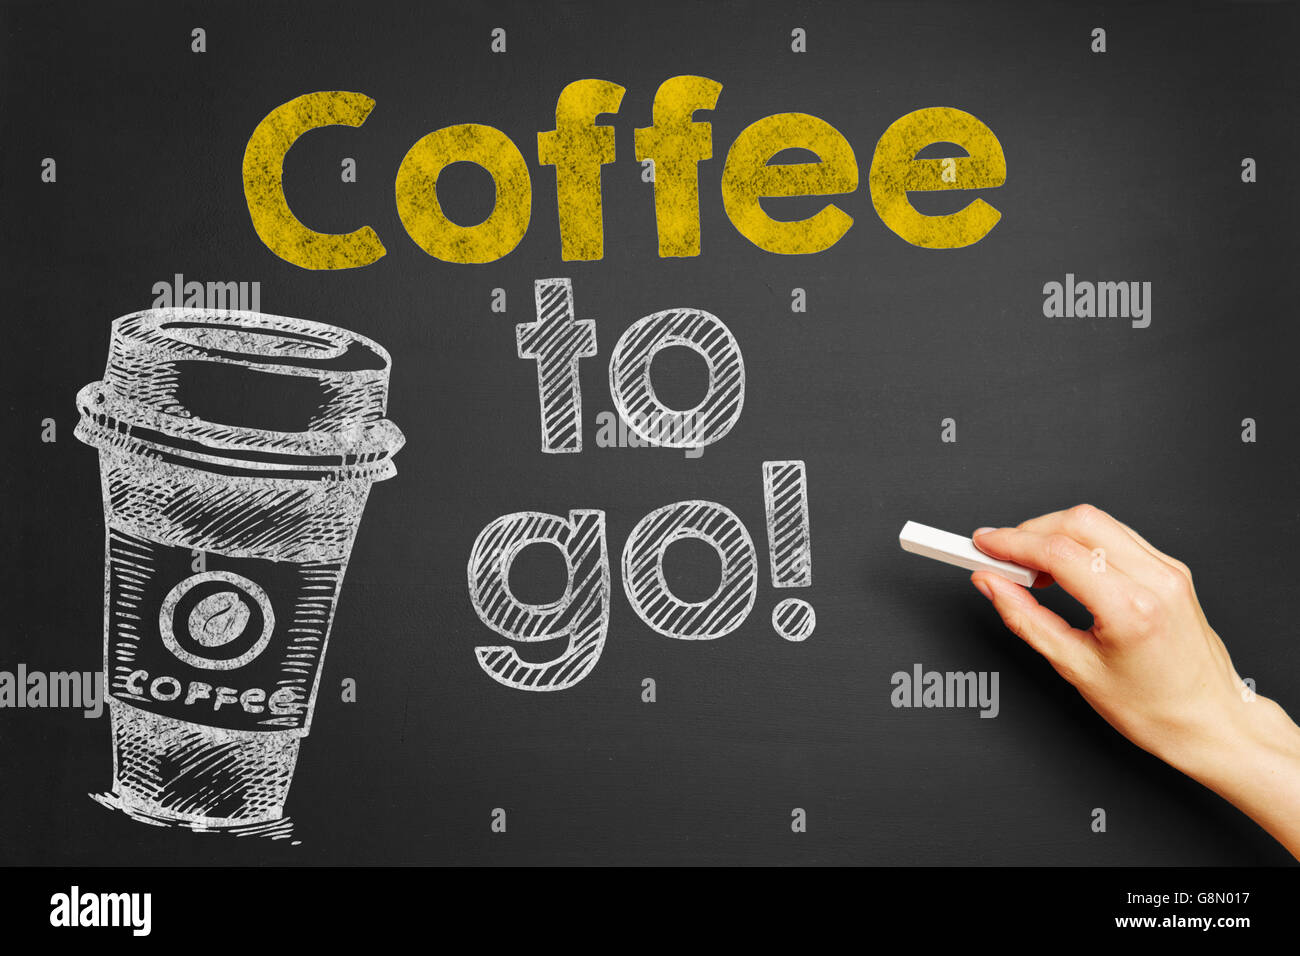 Part écrit "Coffee to go !" on blackboard Banque D'Images